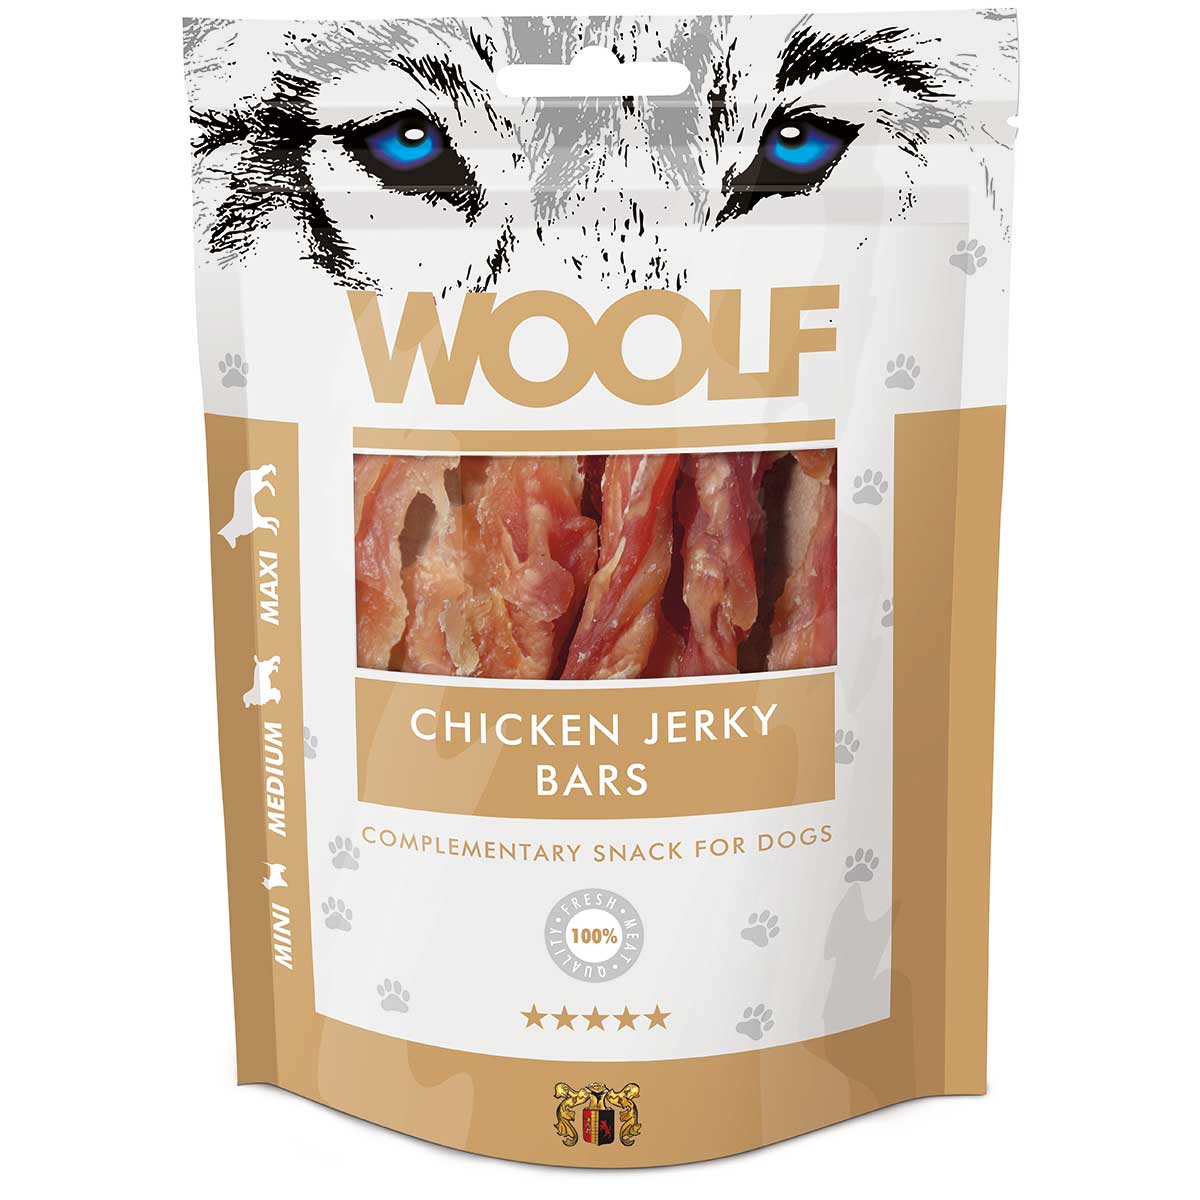 Woolf Dog treat chicken jerky bars